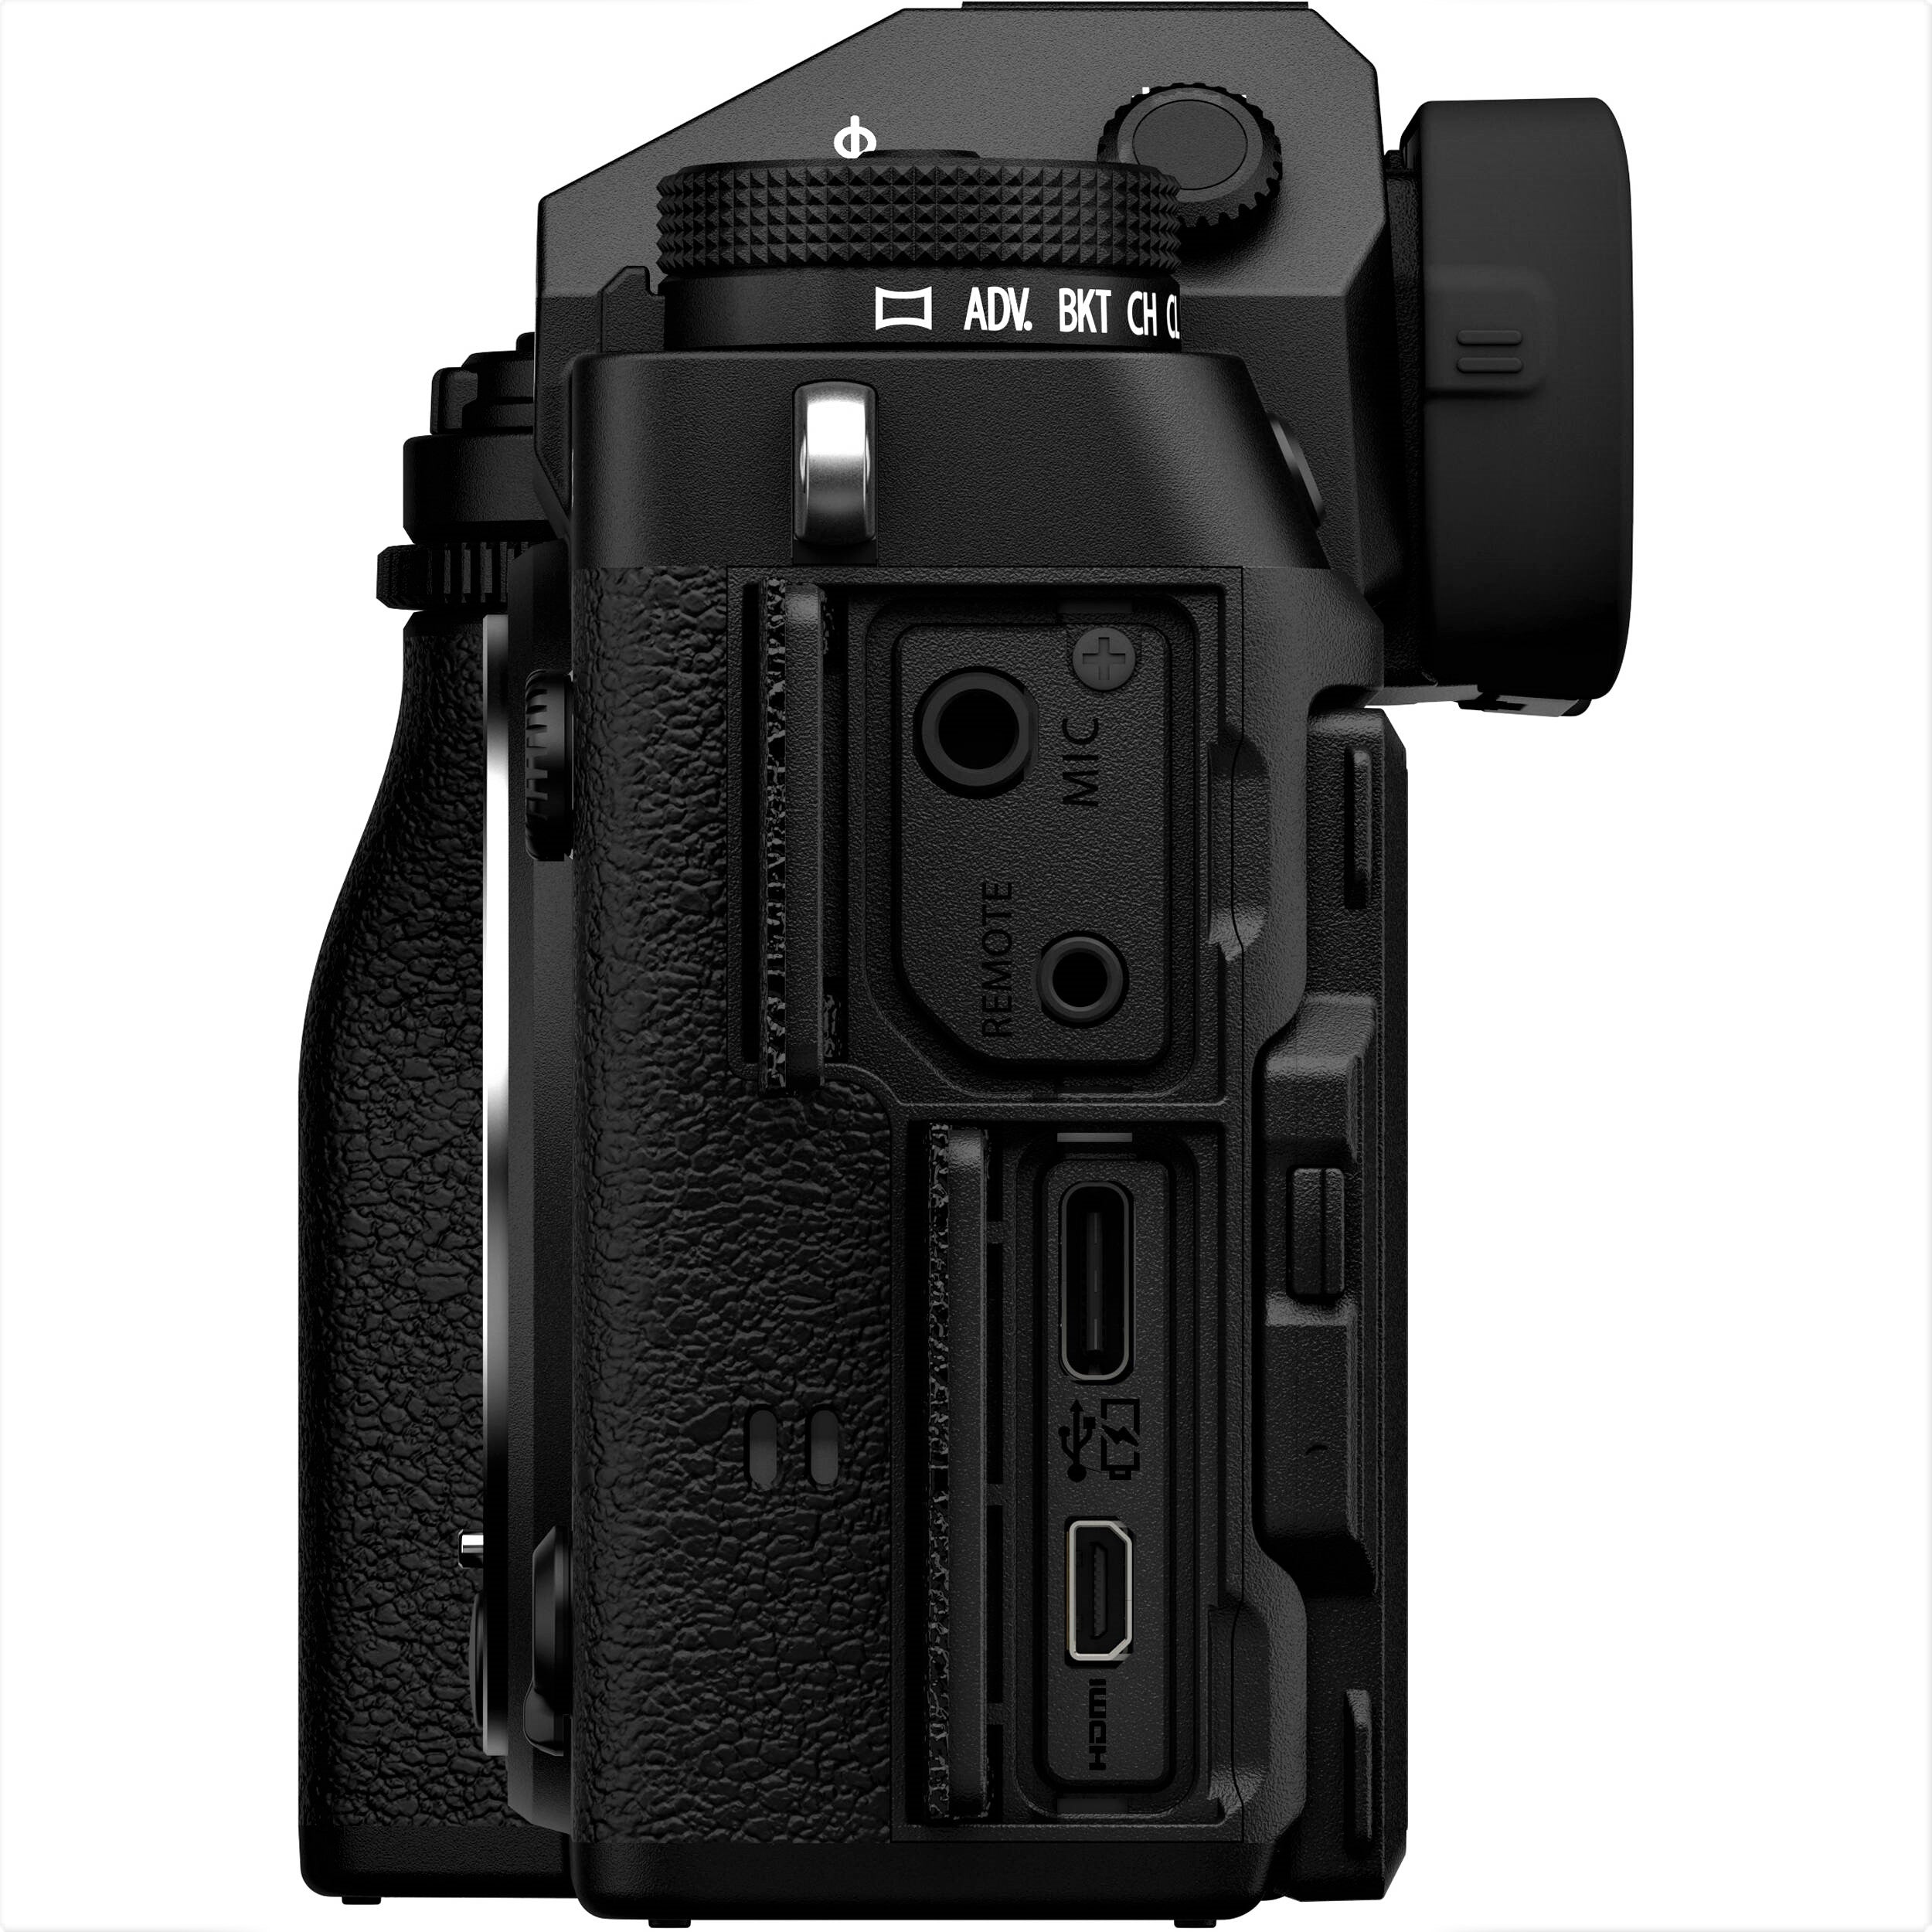 Fujifilm X-T5 Mirrorless Camera with 16-80mm Lens (Black) - Side View